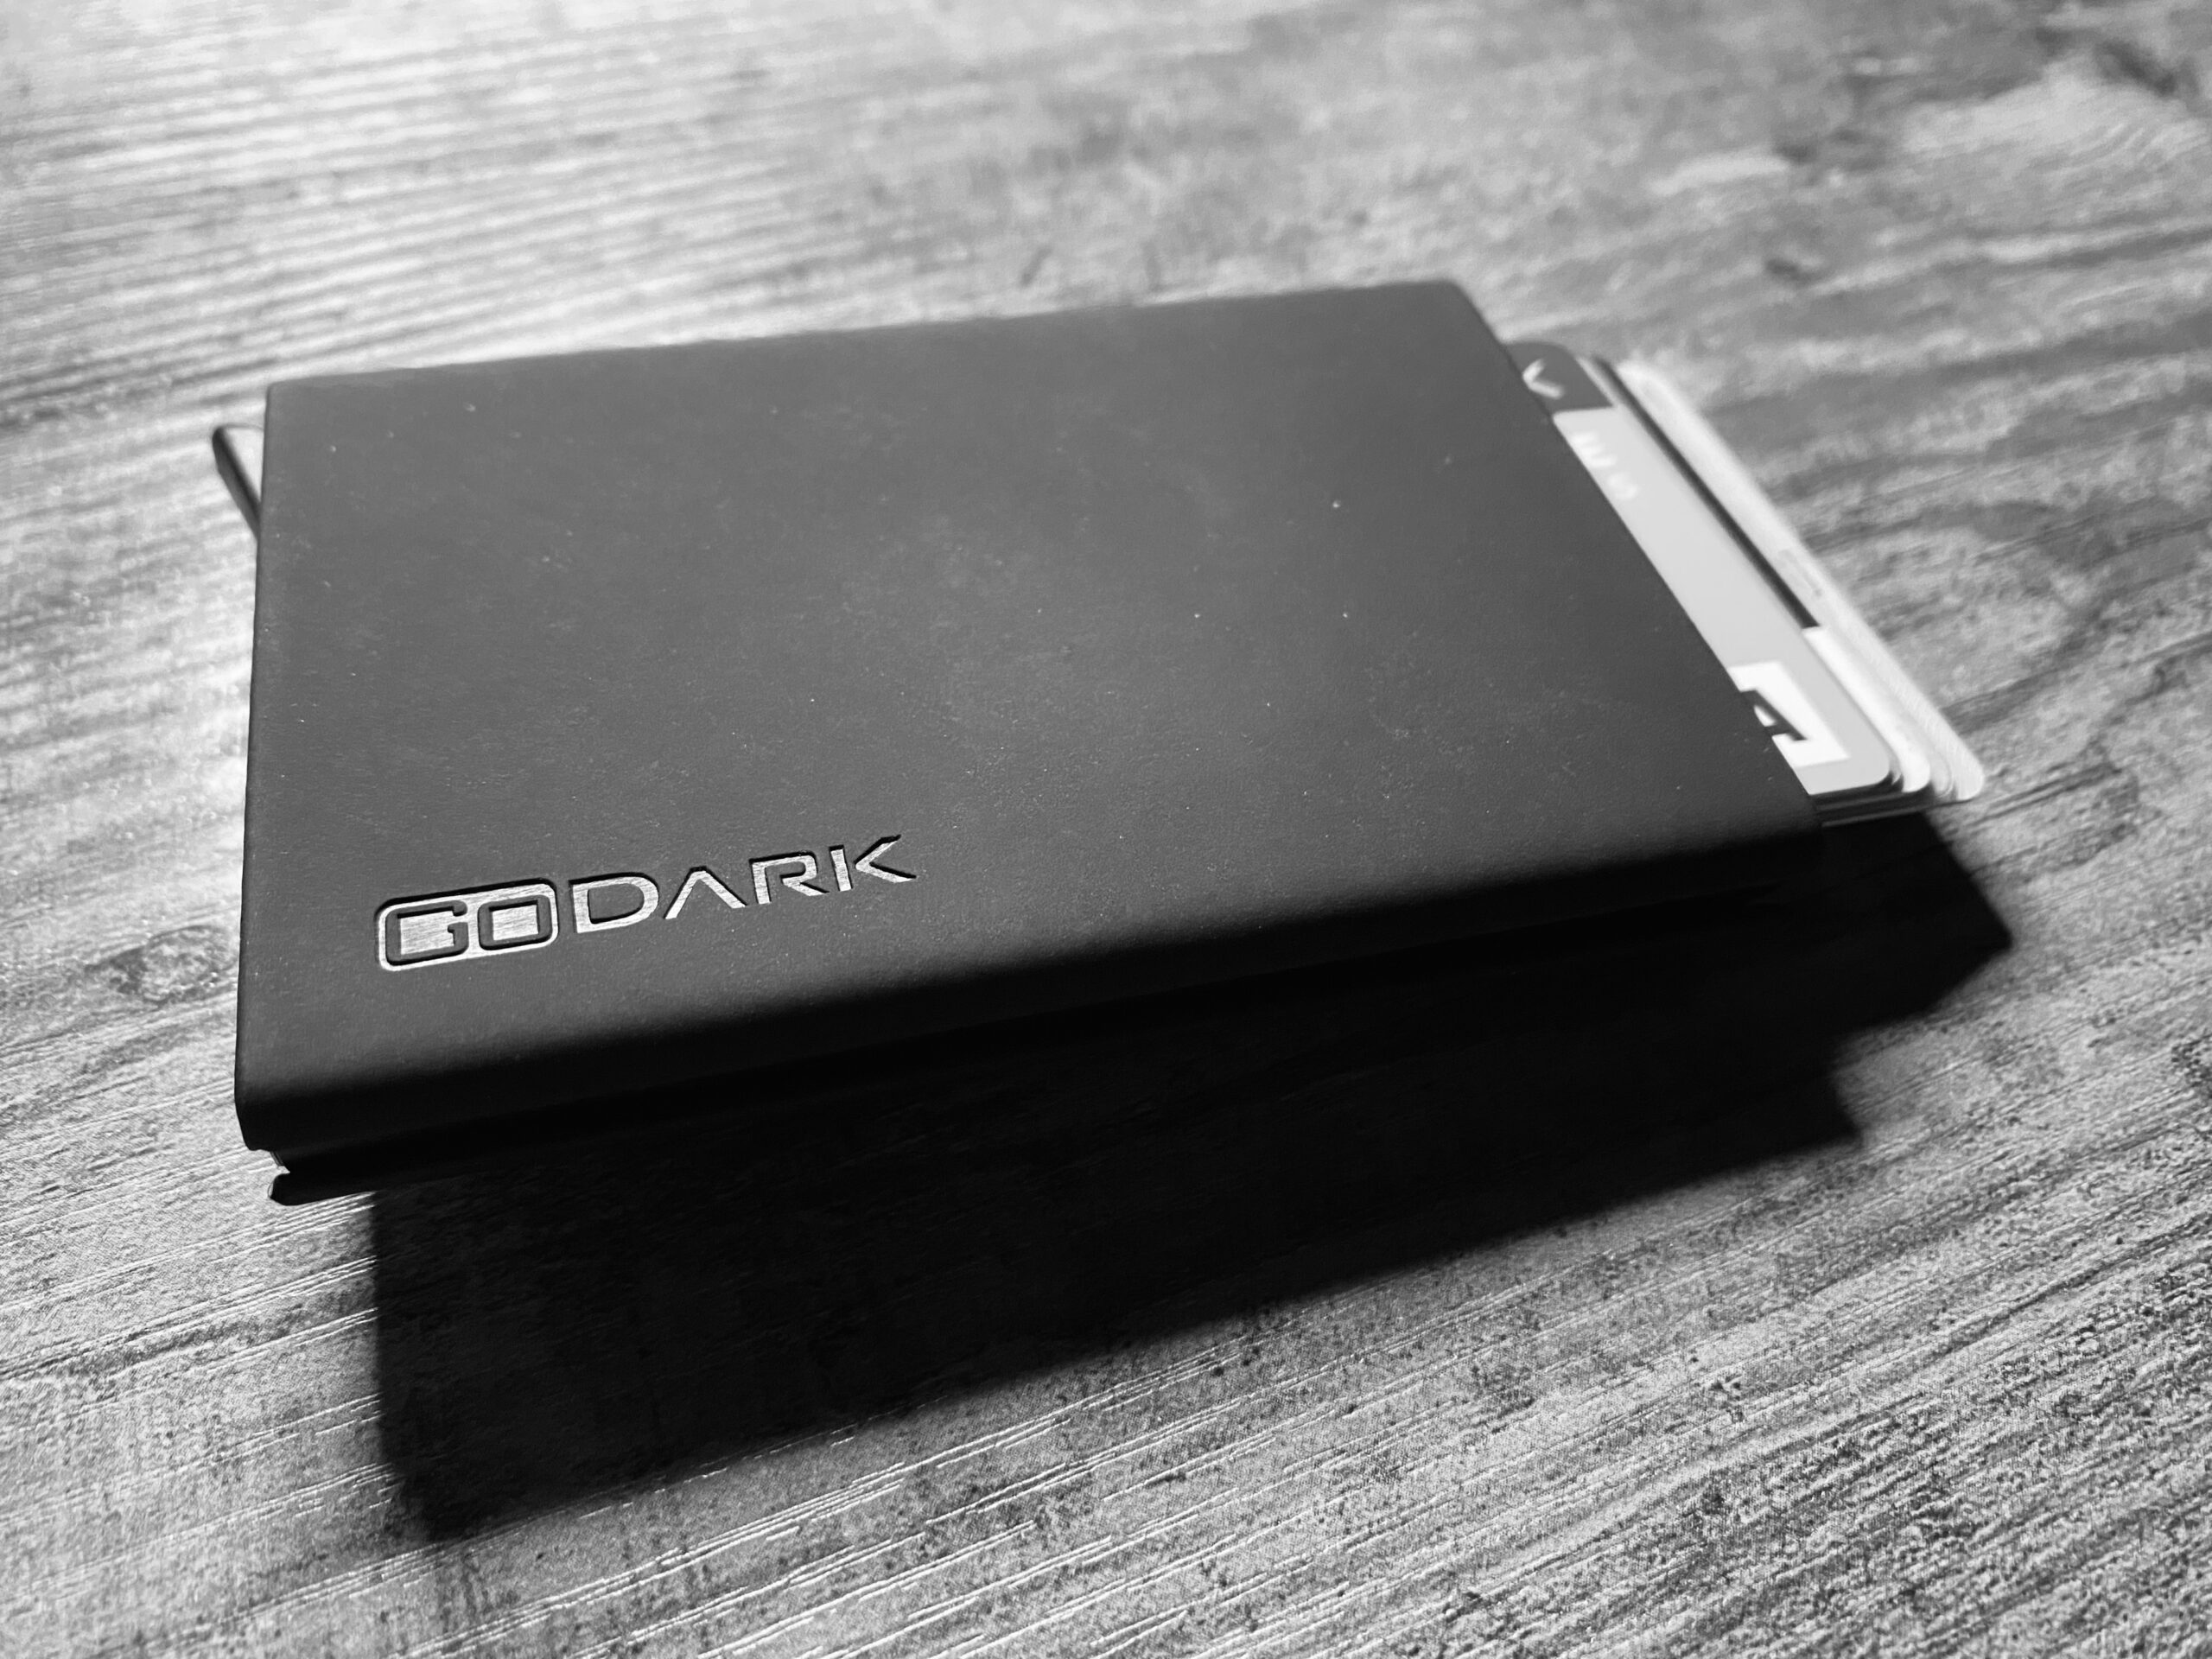 GoDark RFID Wallet: Protect Your Digital Life